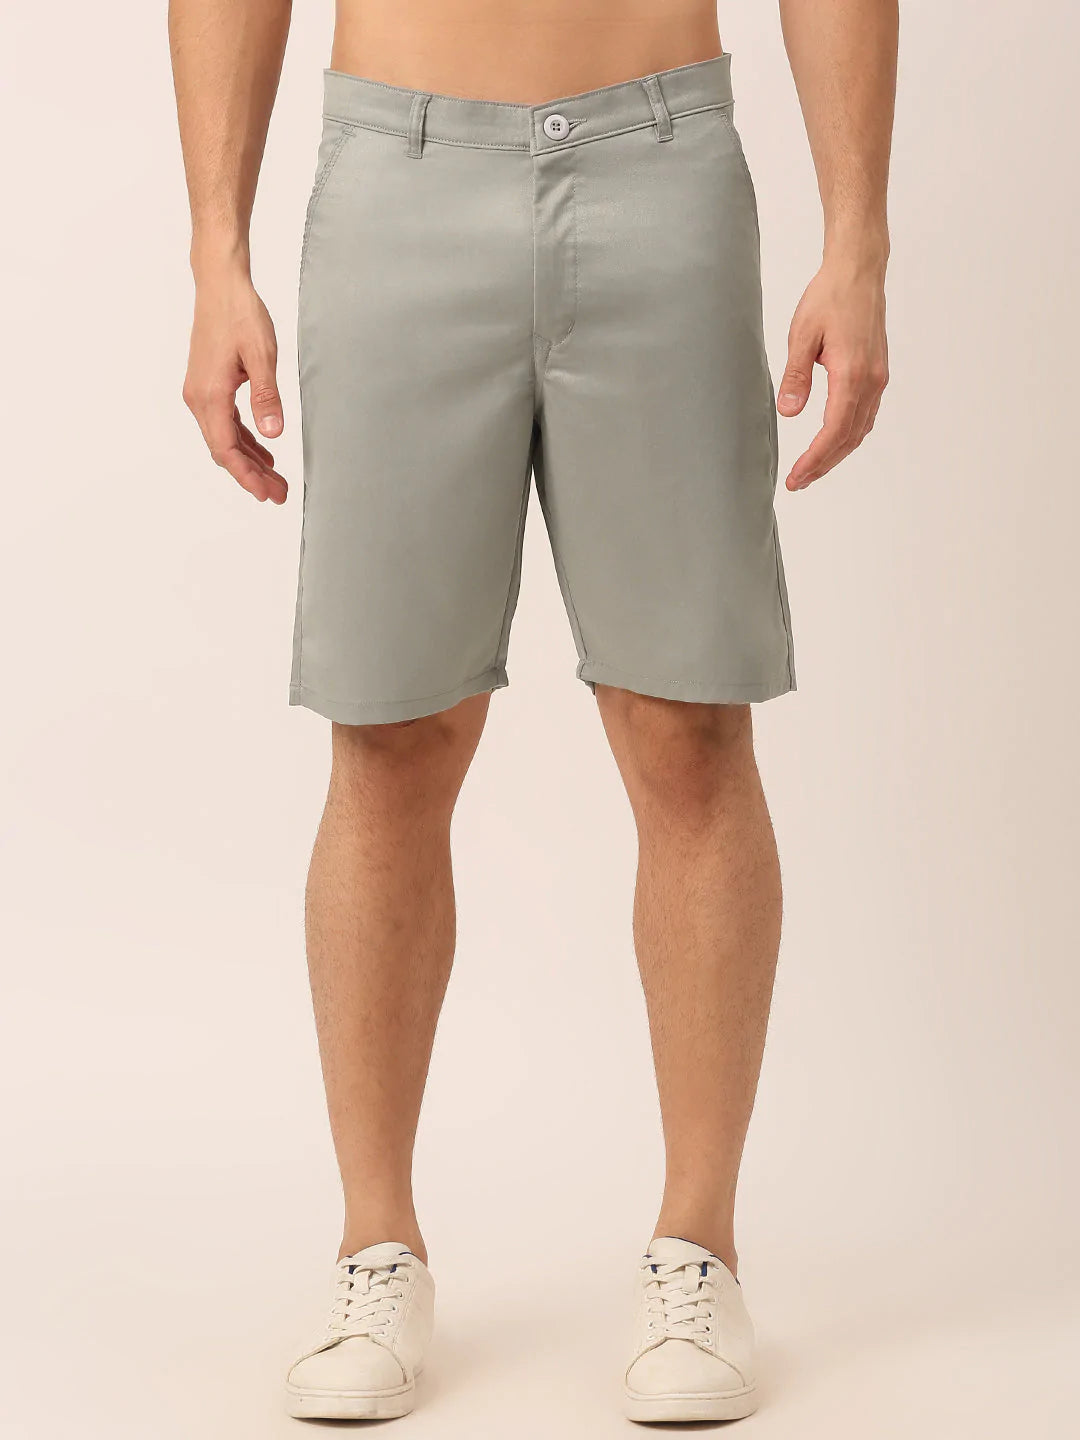 Jainish Men's Casual Cotton Solid Shorts ( SGP 153 Light-Grey )